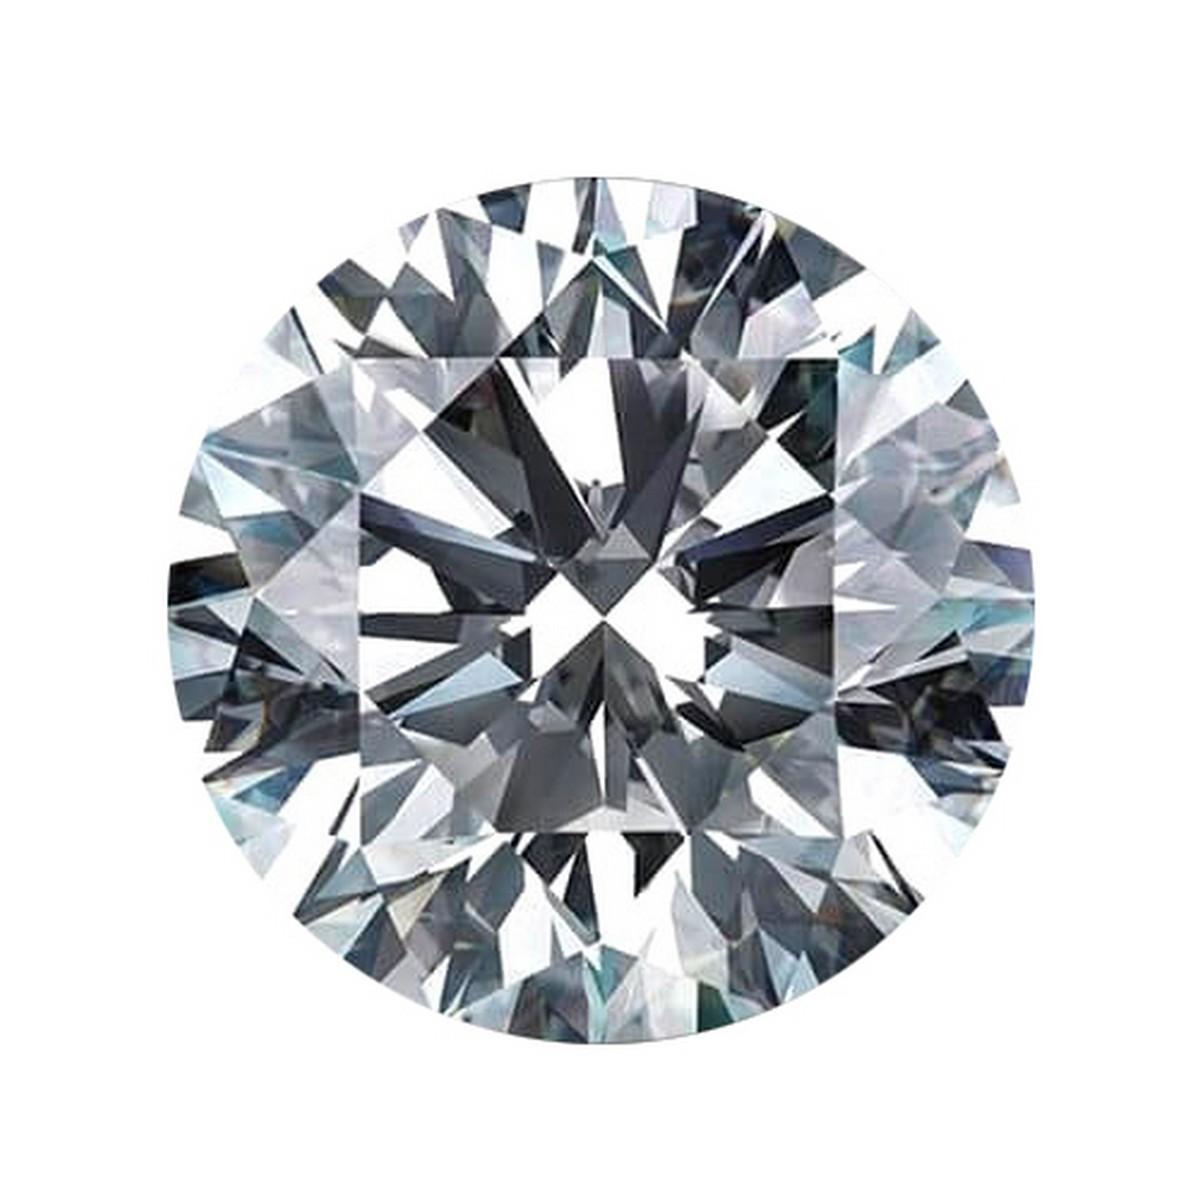 16.13 ctw. VVS2 IGI Certified Round Cut Loose Diamond (LAB GROWN)